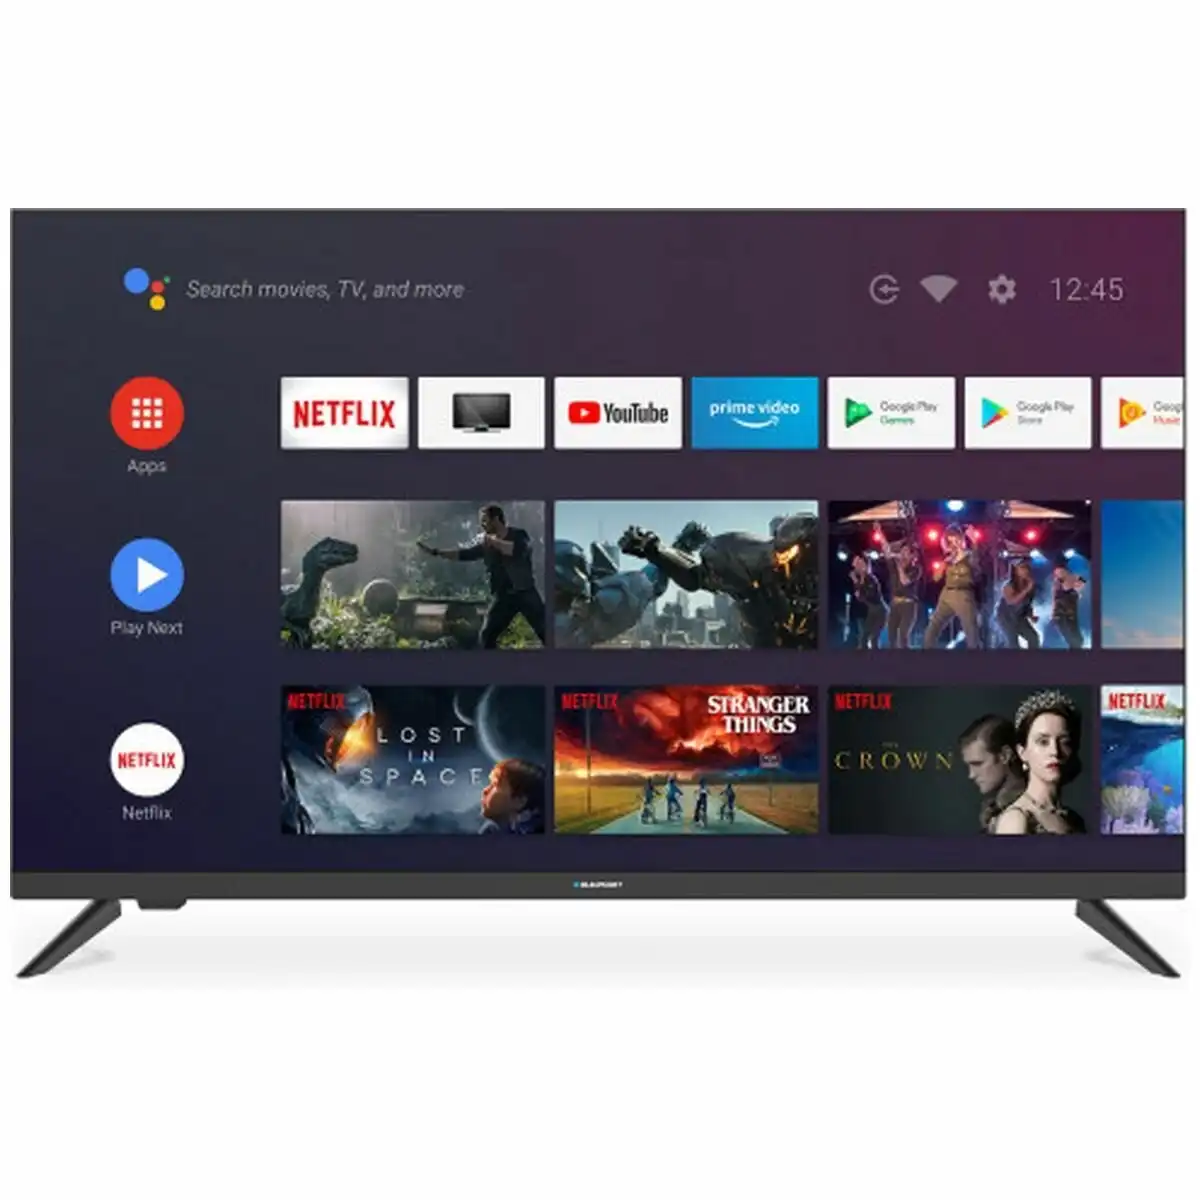 Blaupunkt 32" HD Android TV